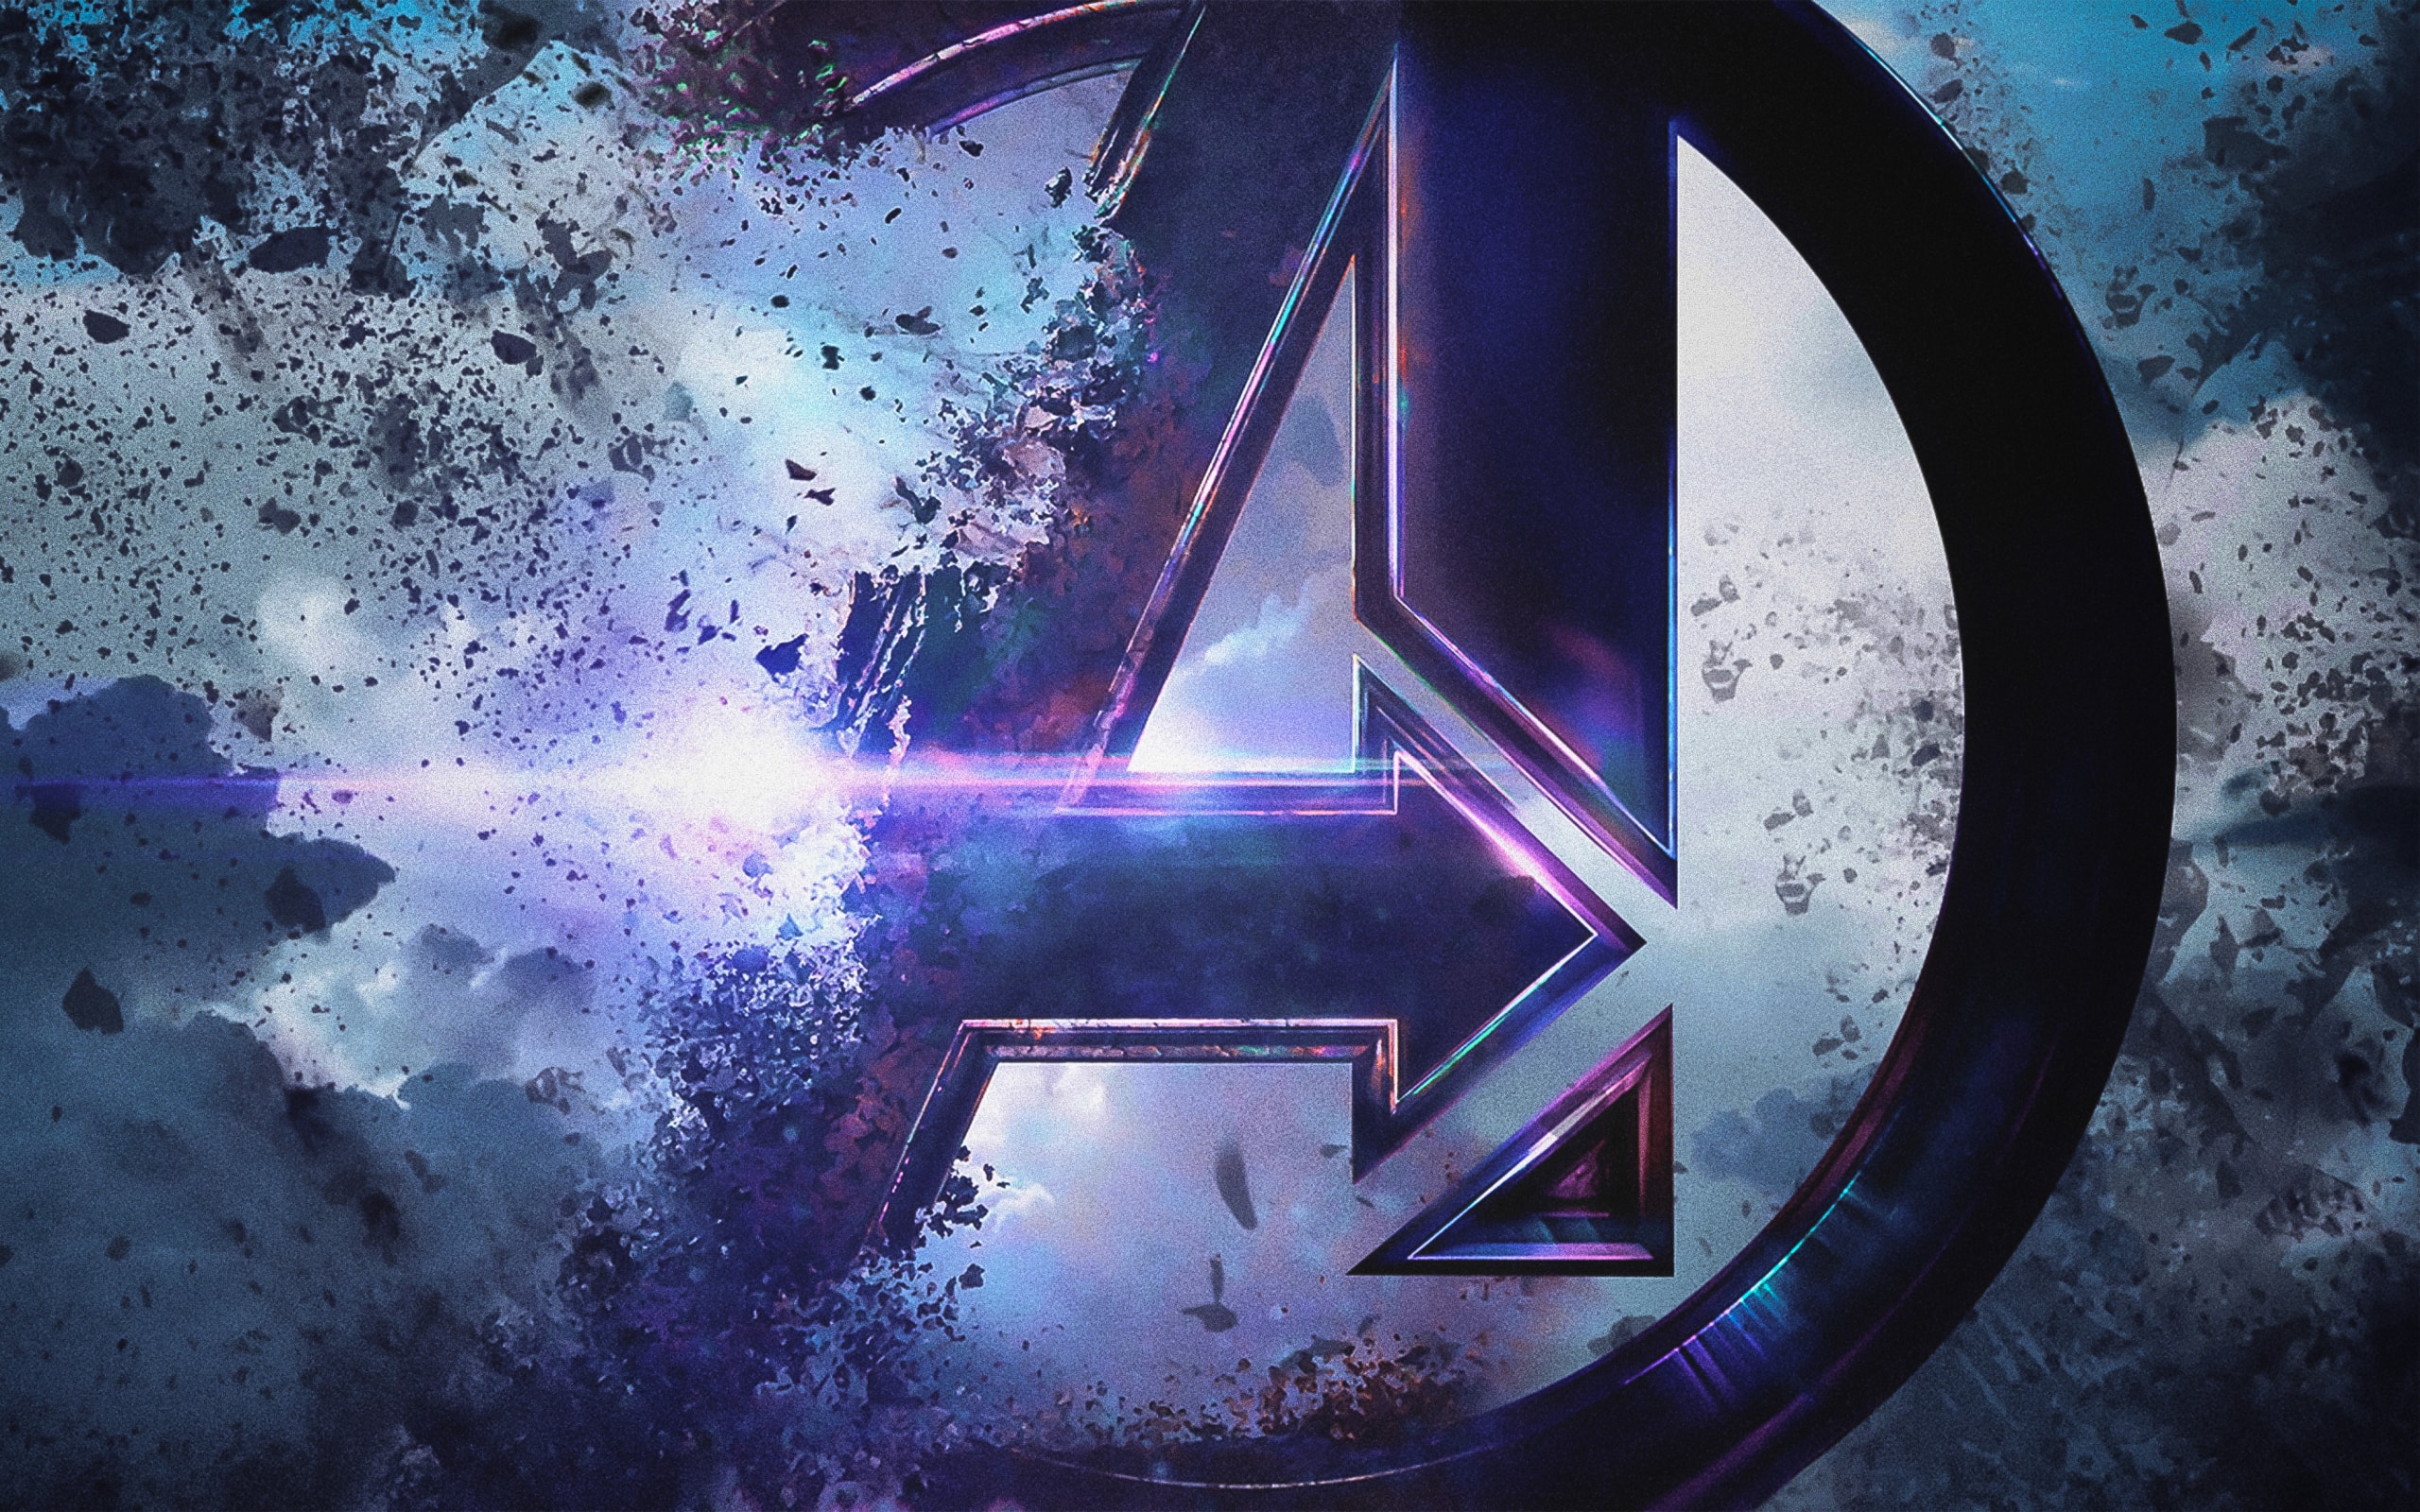 Poster Of Avengers Endgame Movie Wallpapers